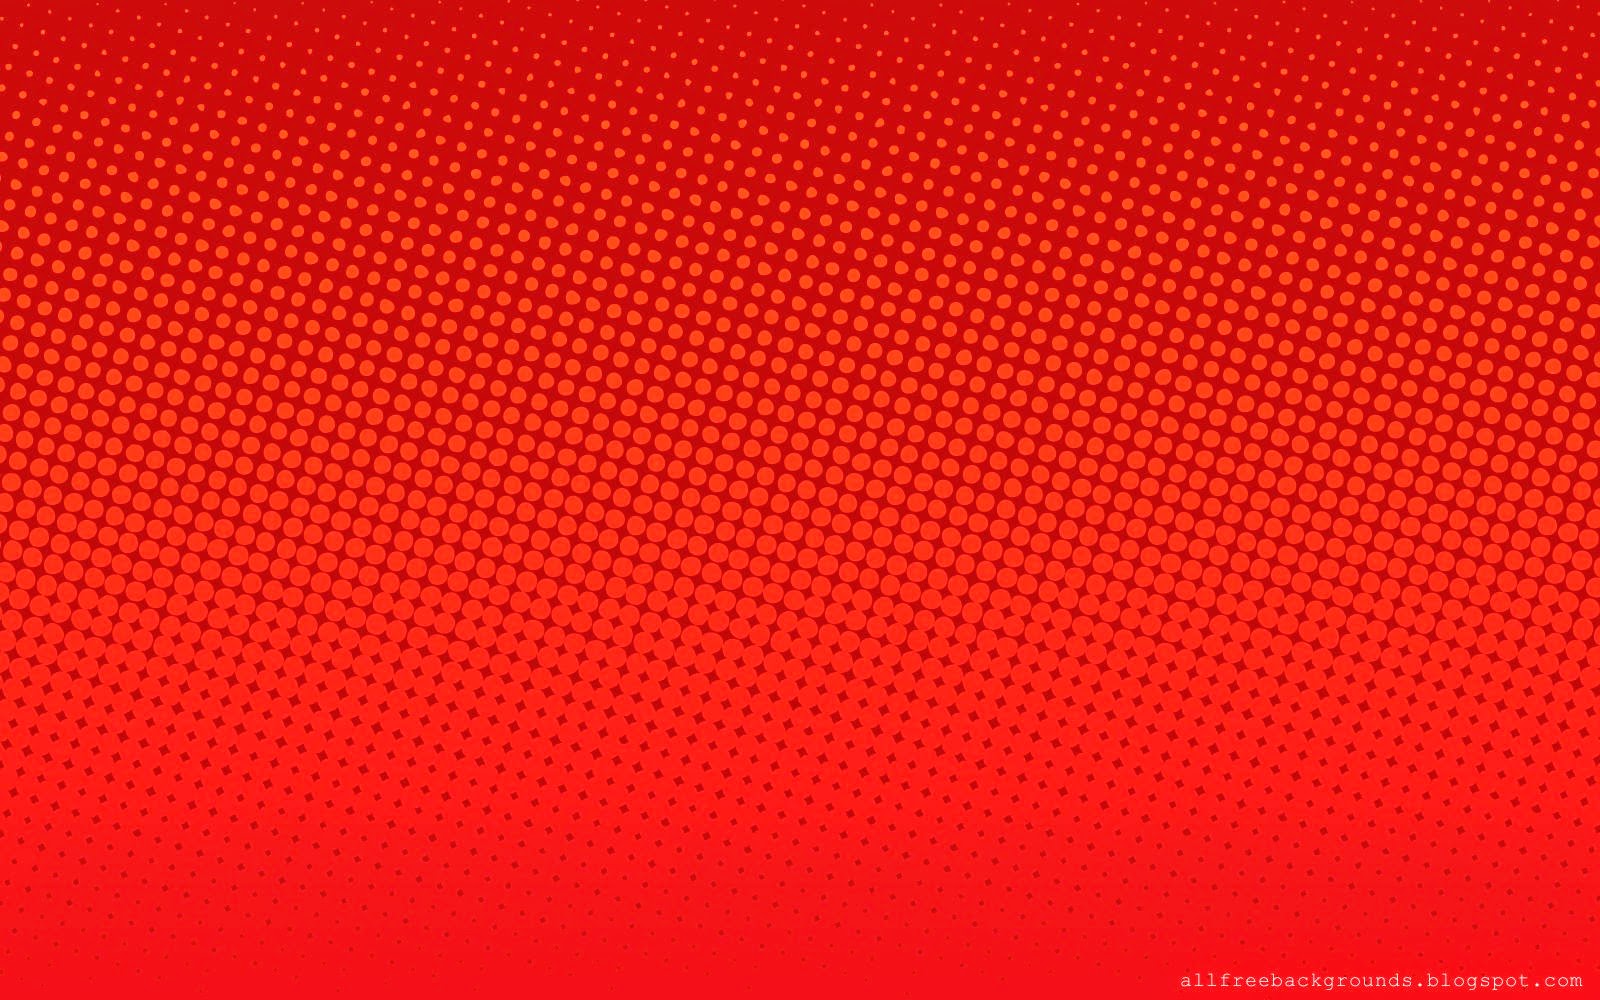 Download Background Warna Merah Tua Vina Gambar jpg (1600x1000)